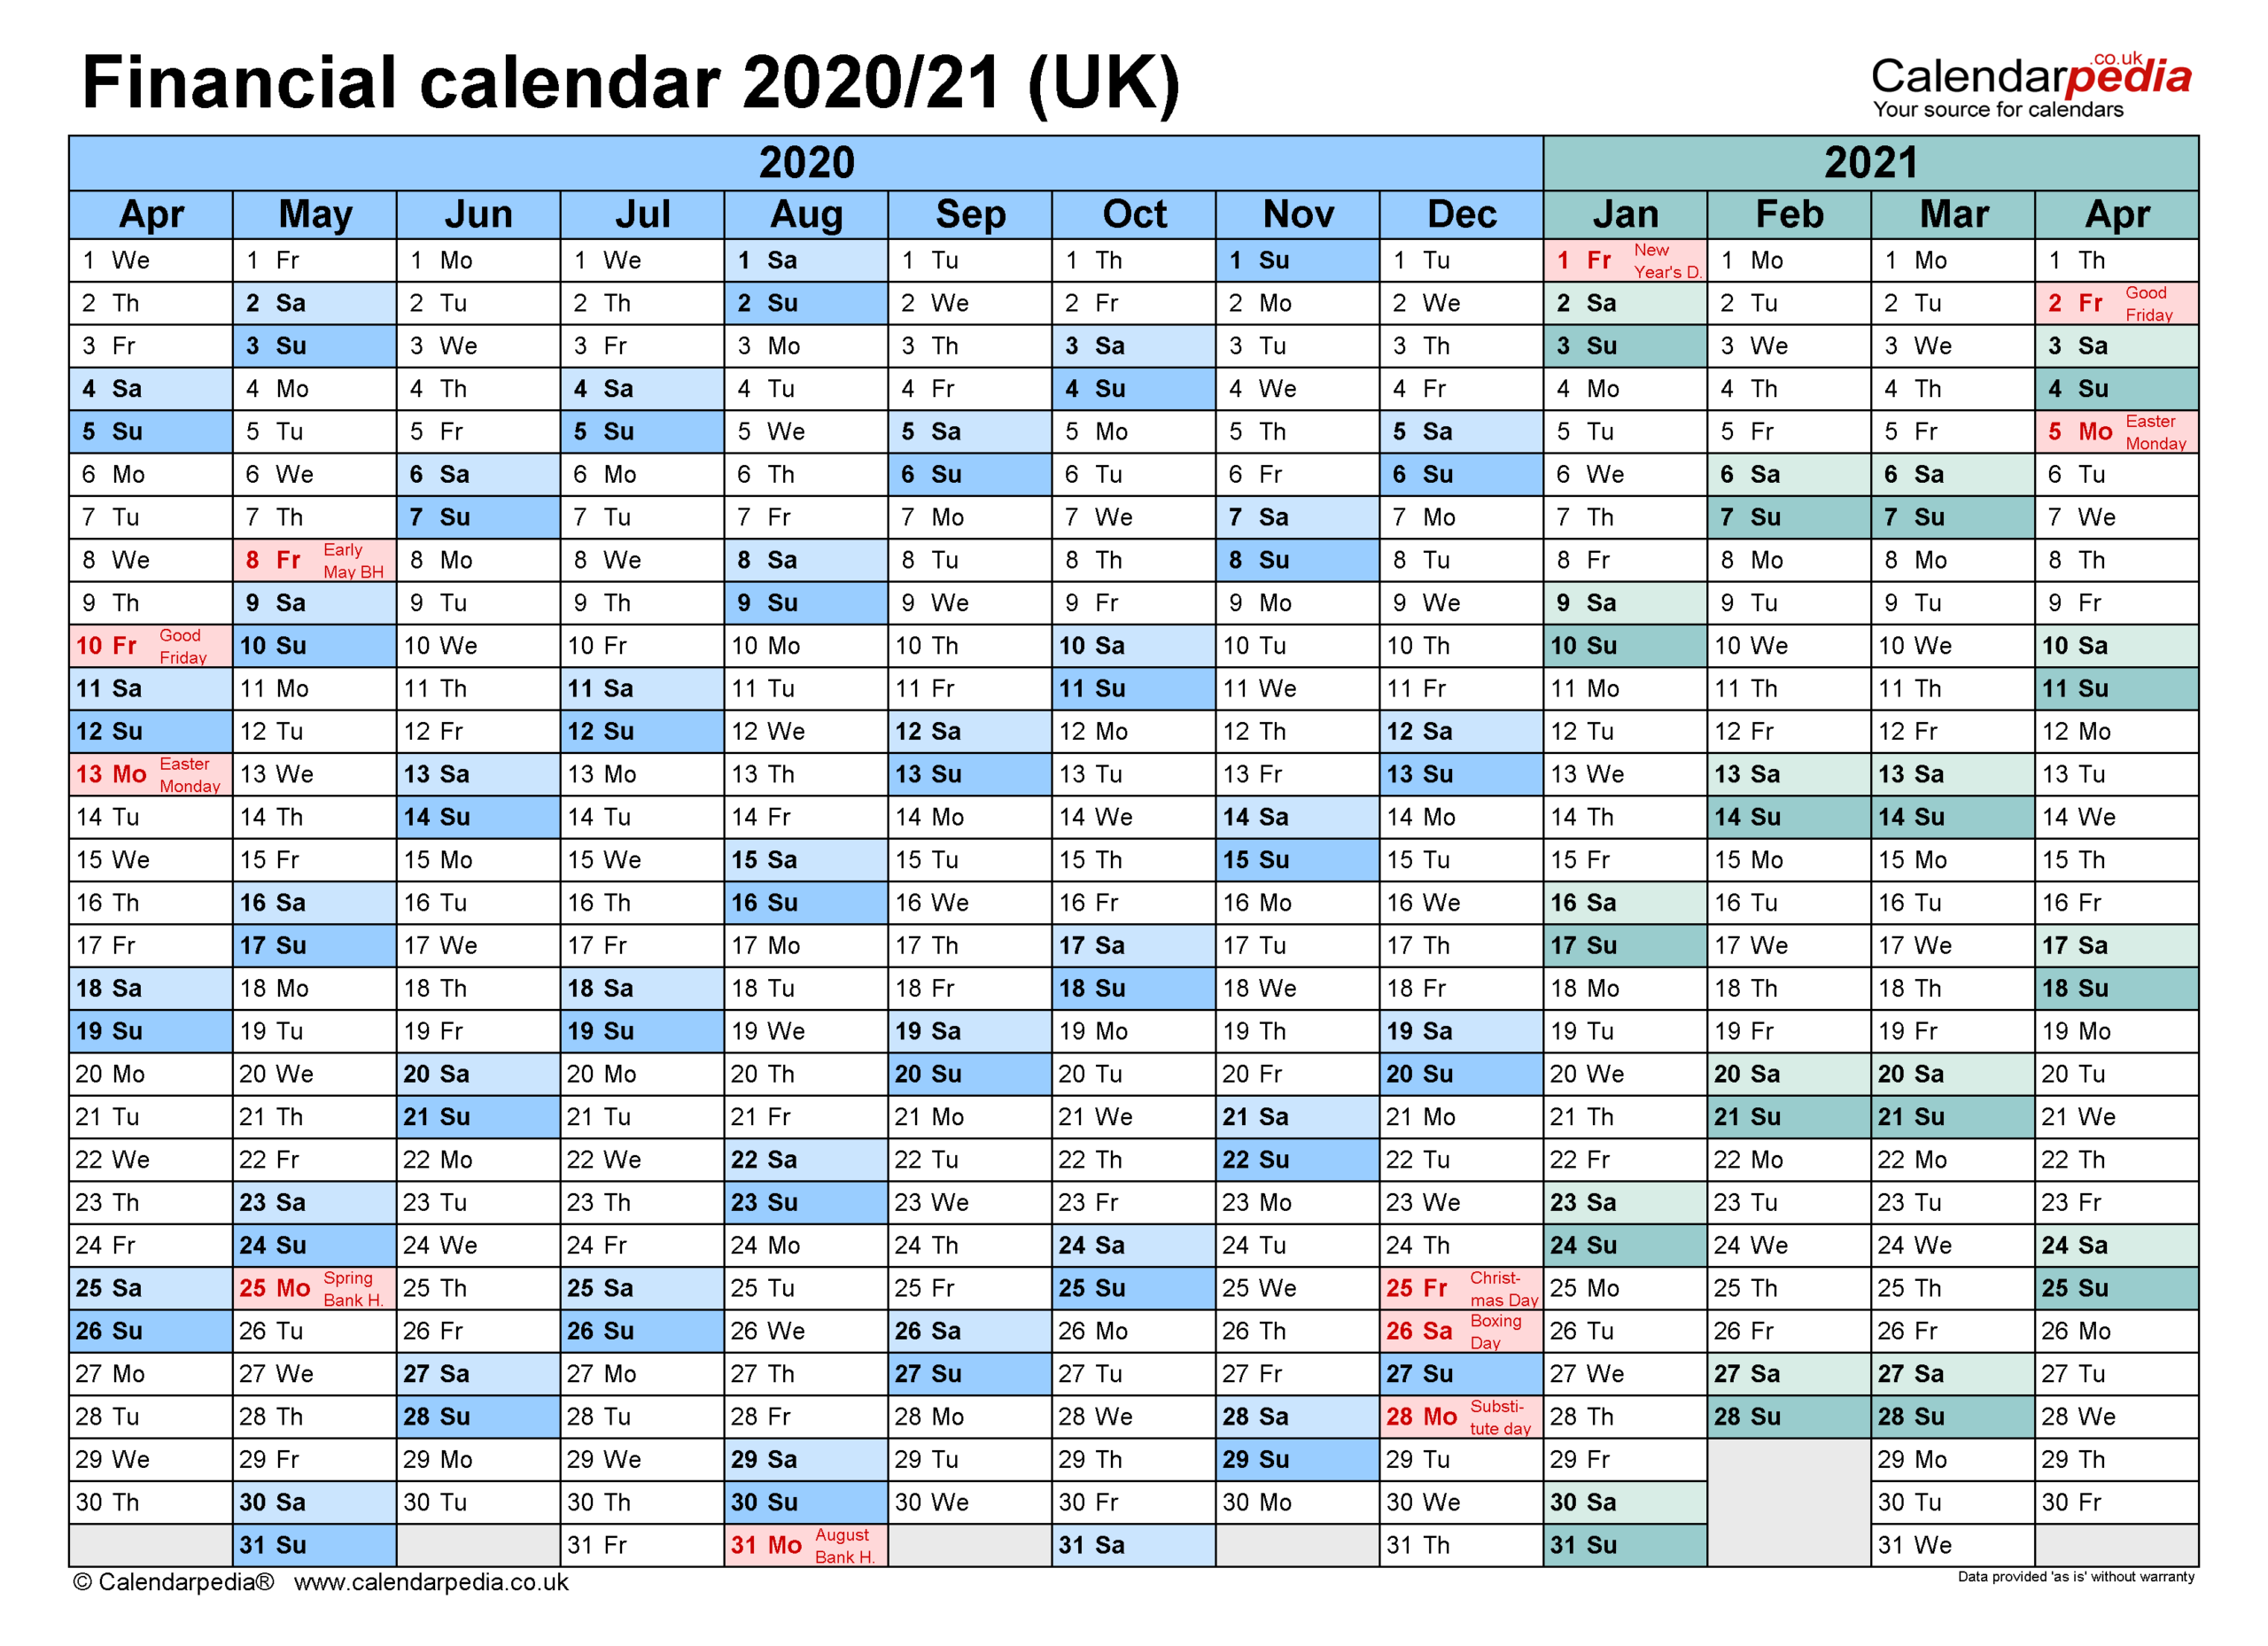 Financial Calendars 202021 Uk In Pdf Format